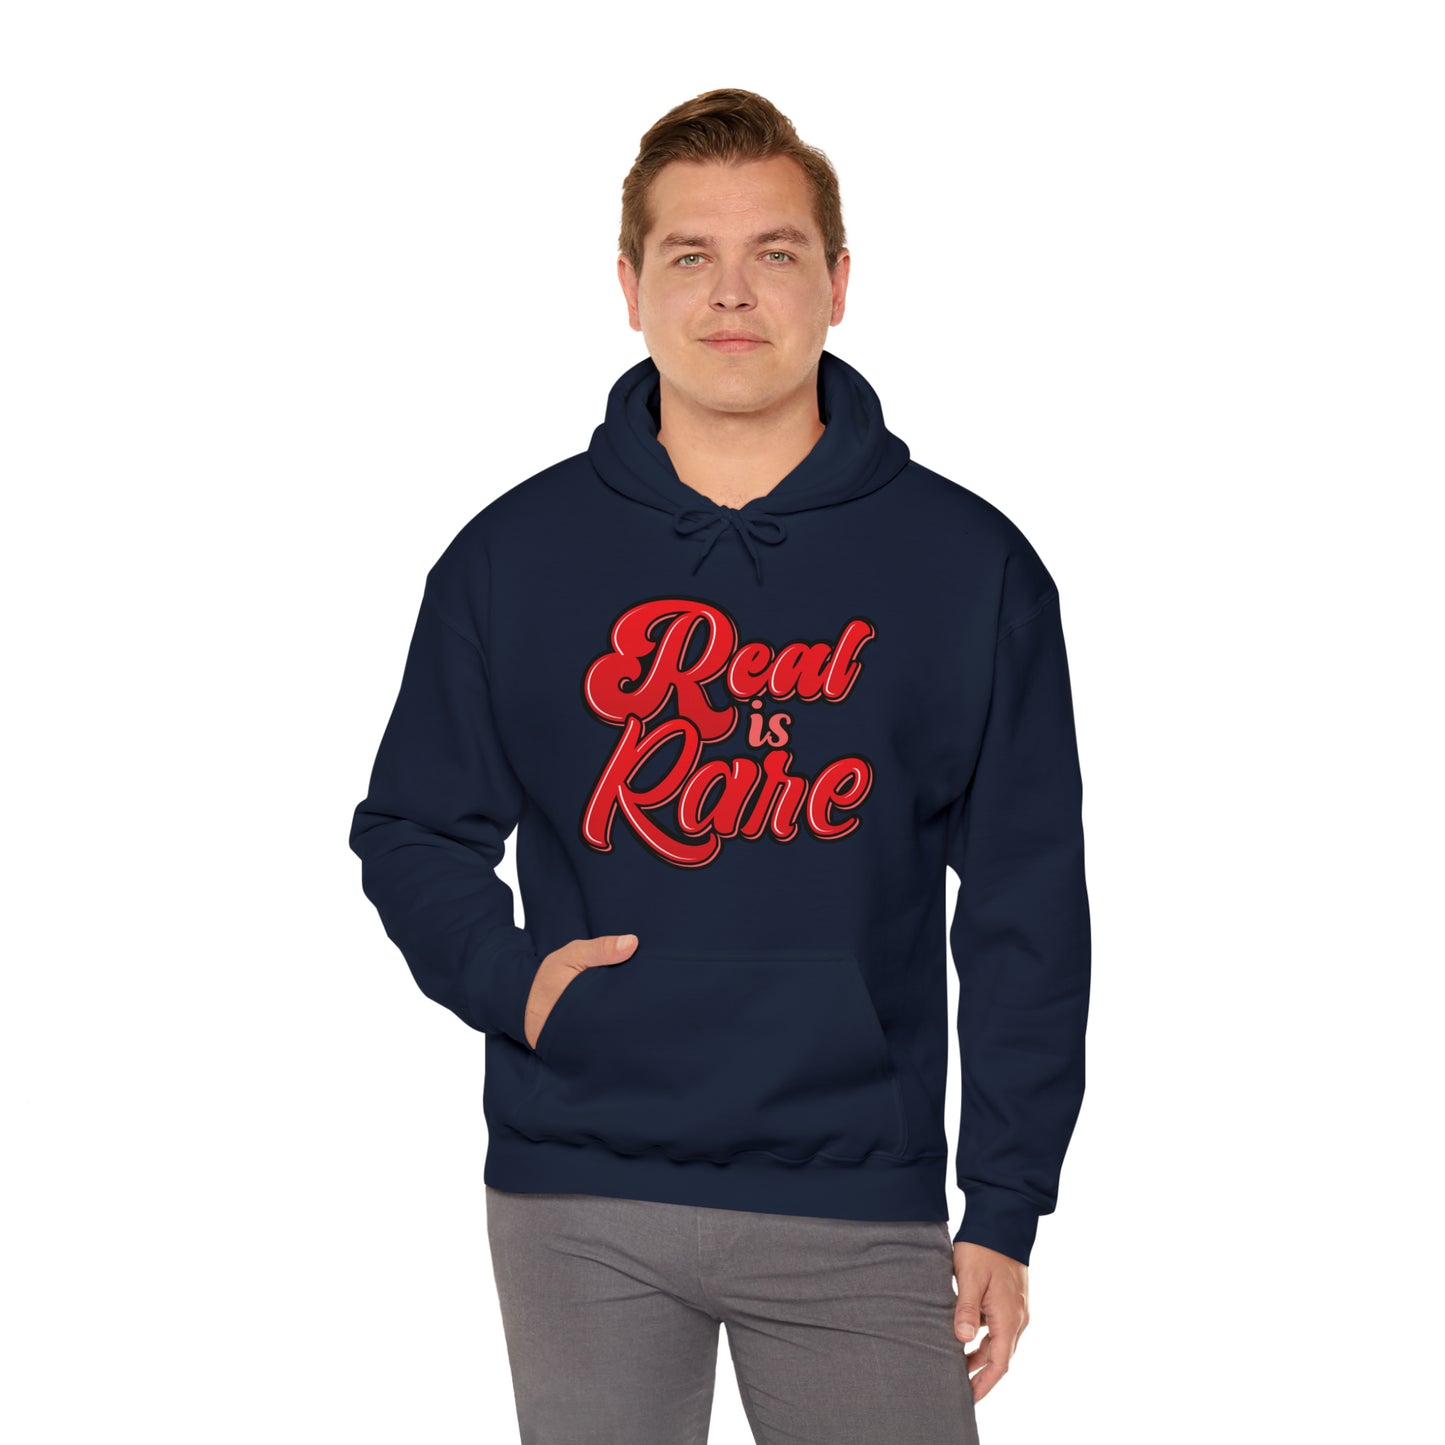 Real is rare hoodie